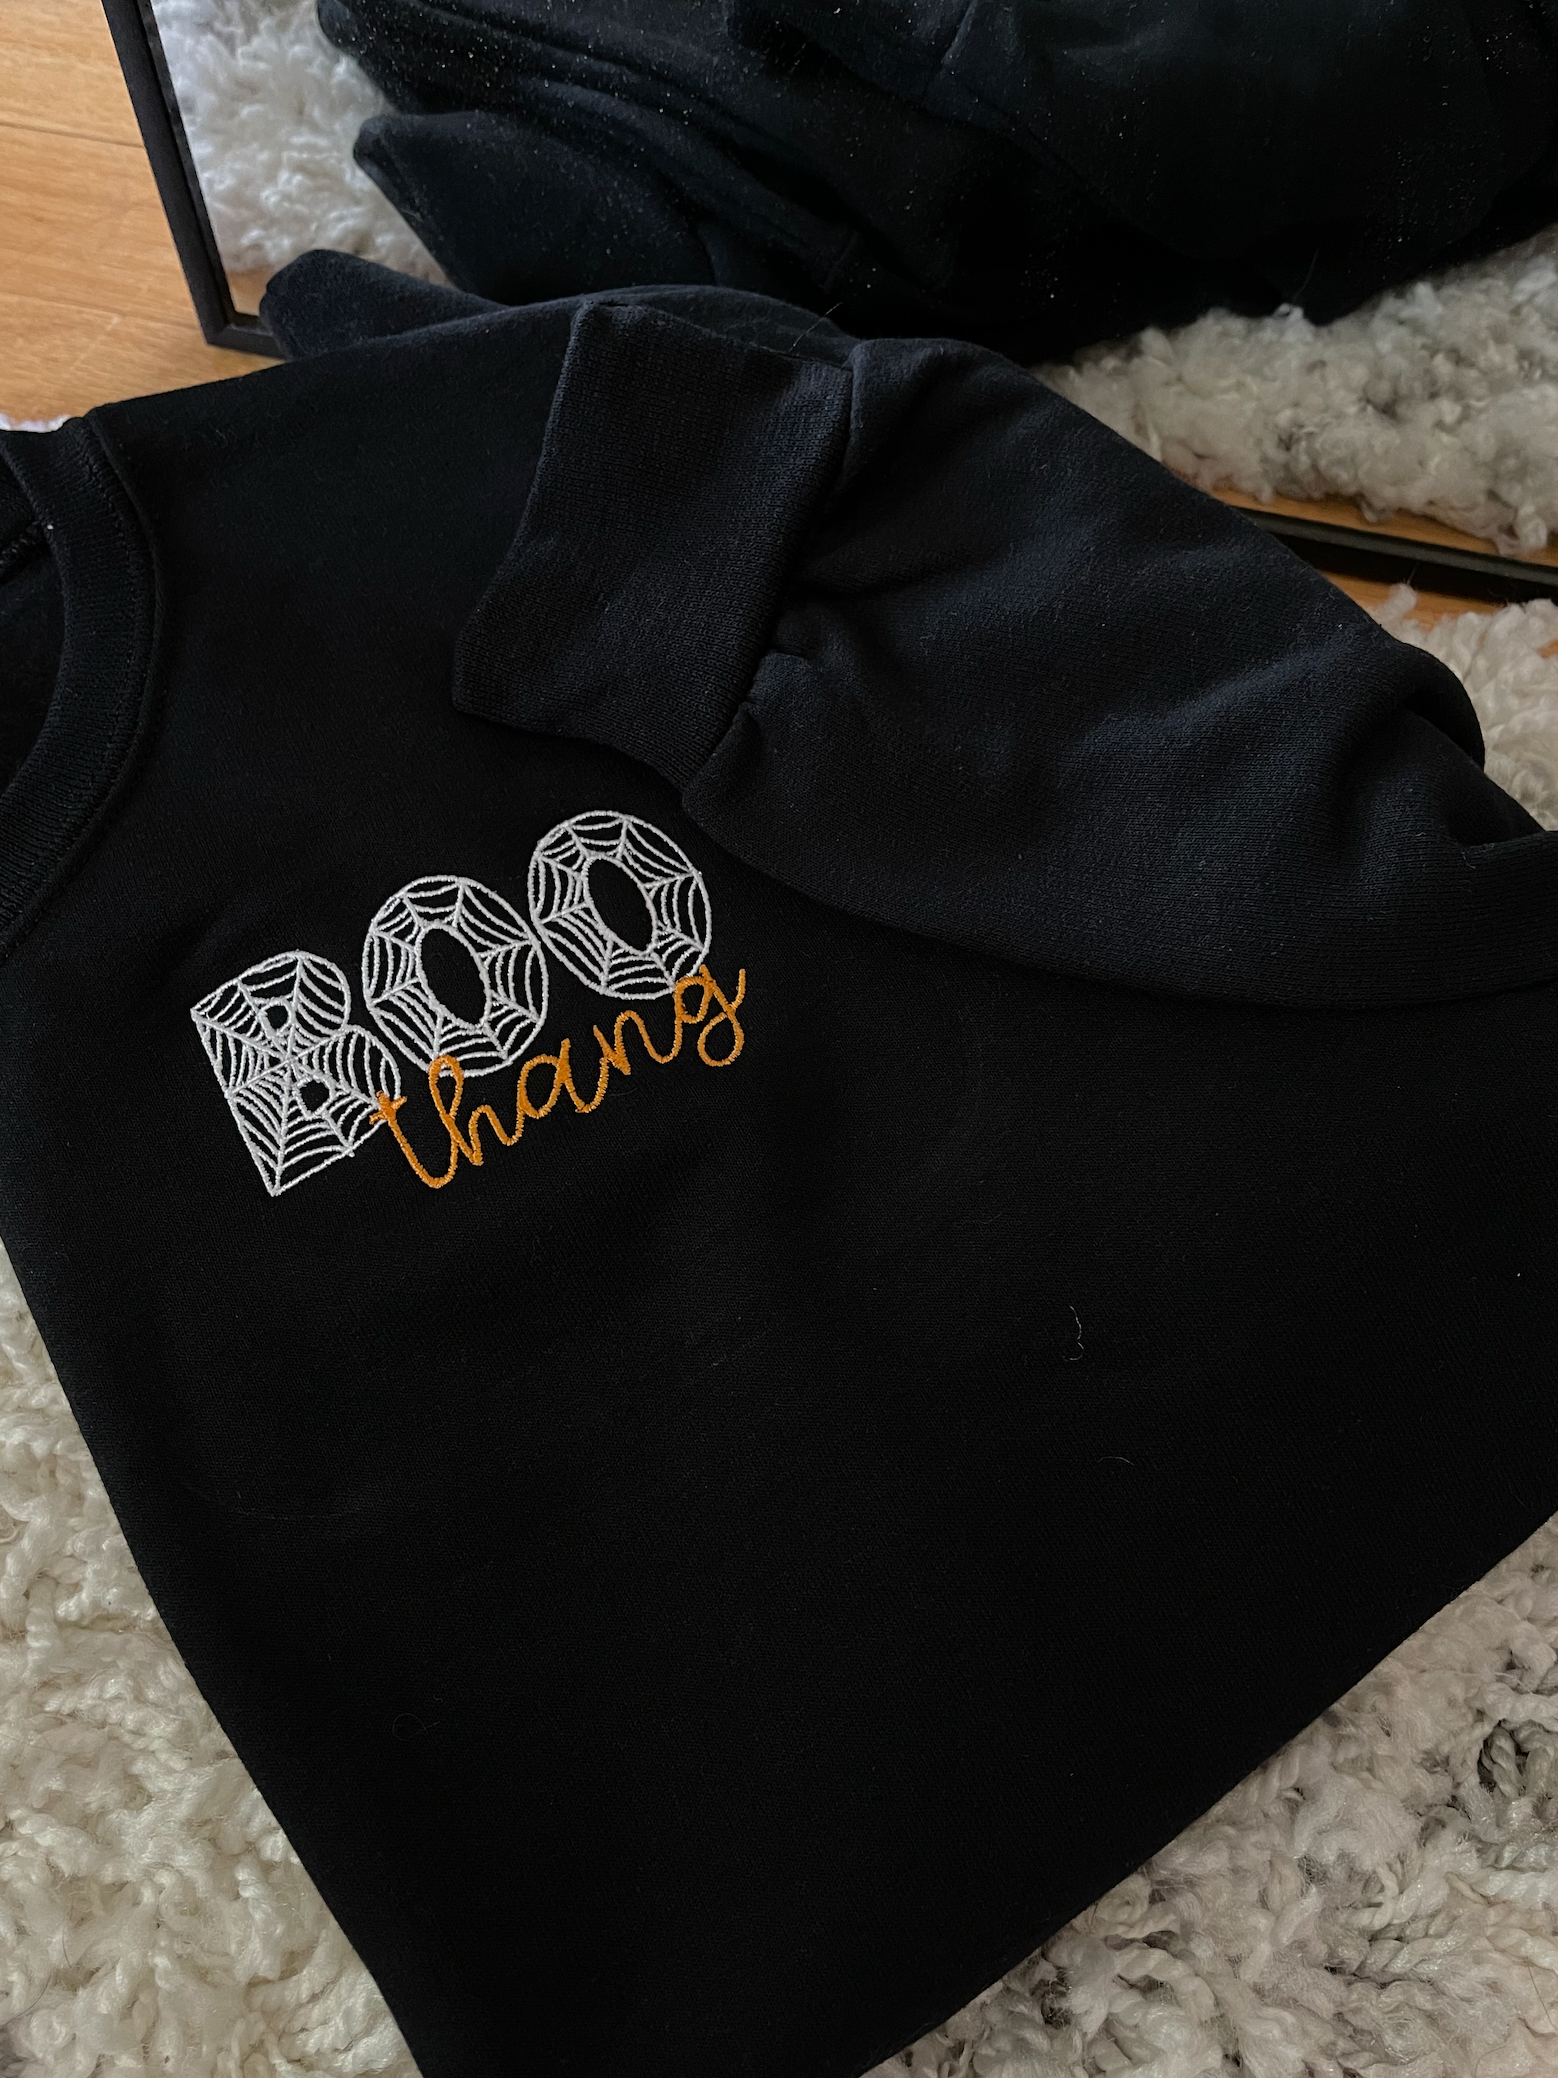 Boo Thang Embroidered Tee + Sweatshirts